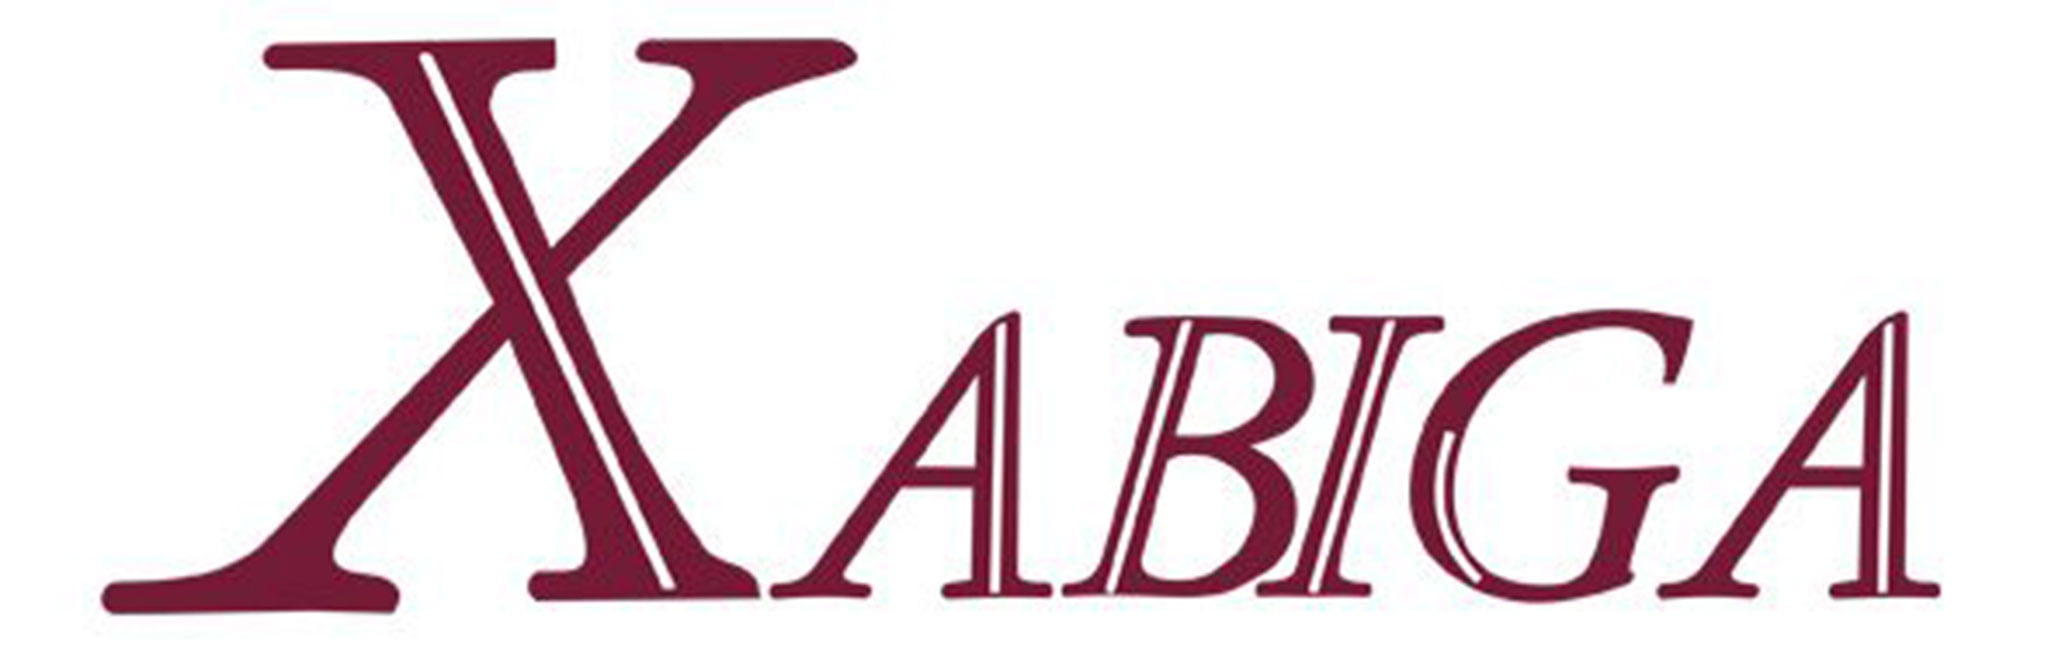 Logotipo Xabiga Inmobiliaria